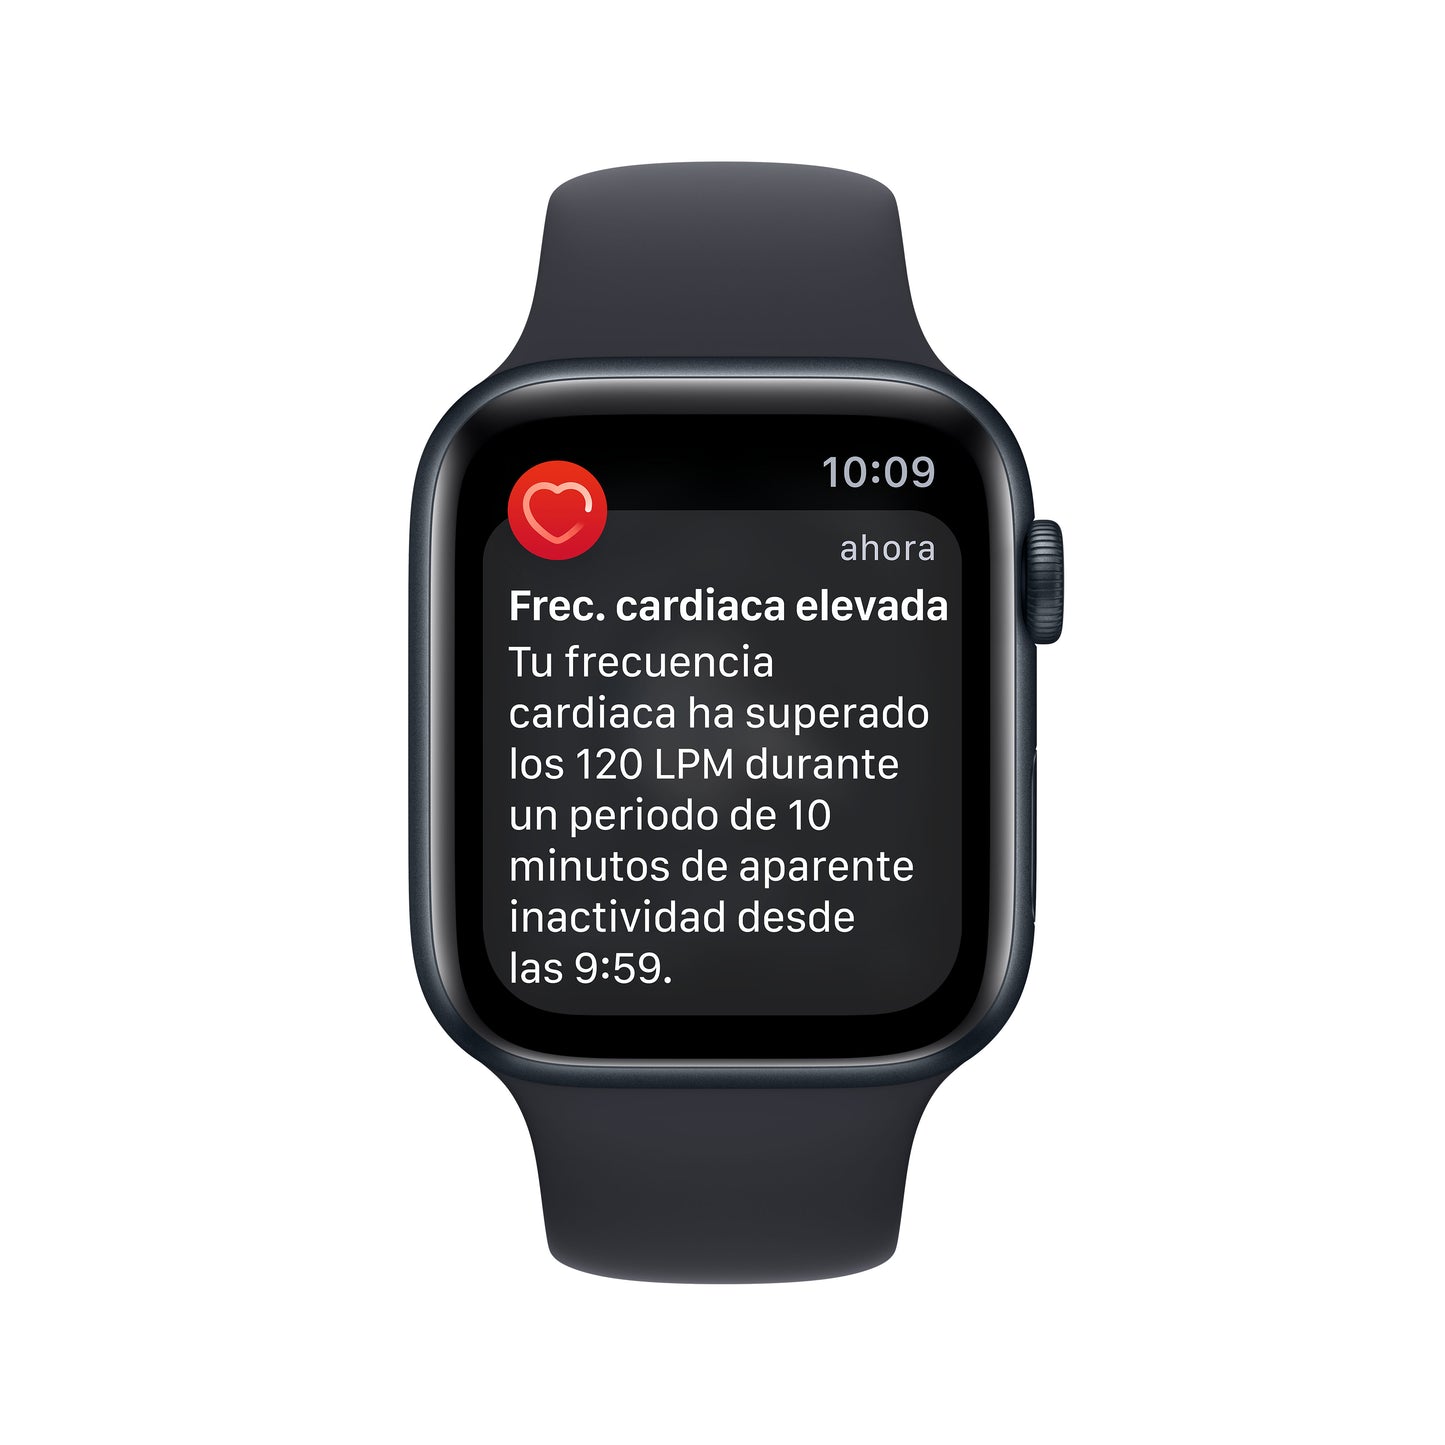 Apple Watch SE mide tu frecuencia cardiaca en www.mac-center.com